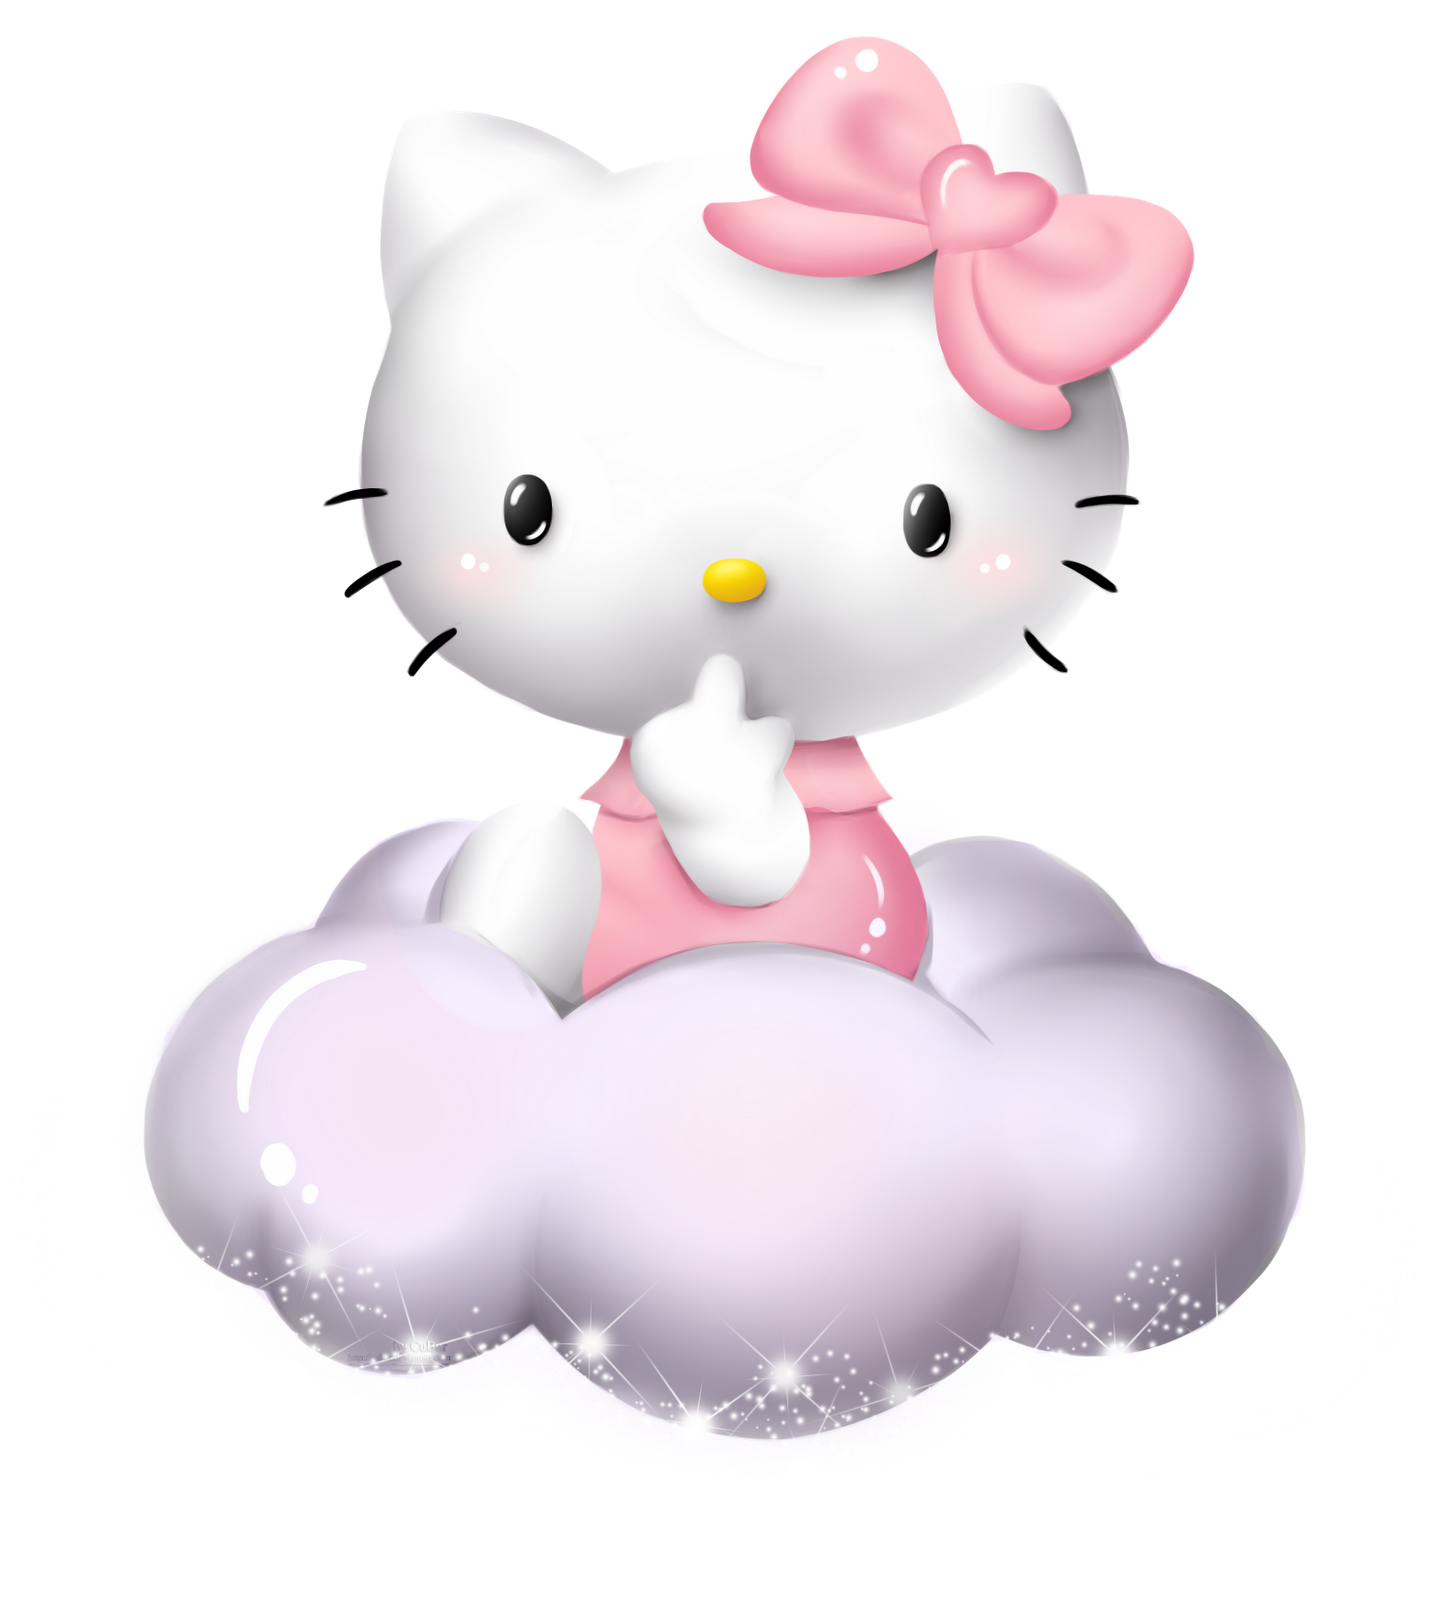 Cartoon Hello Kitty Image Transparente